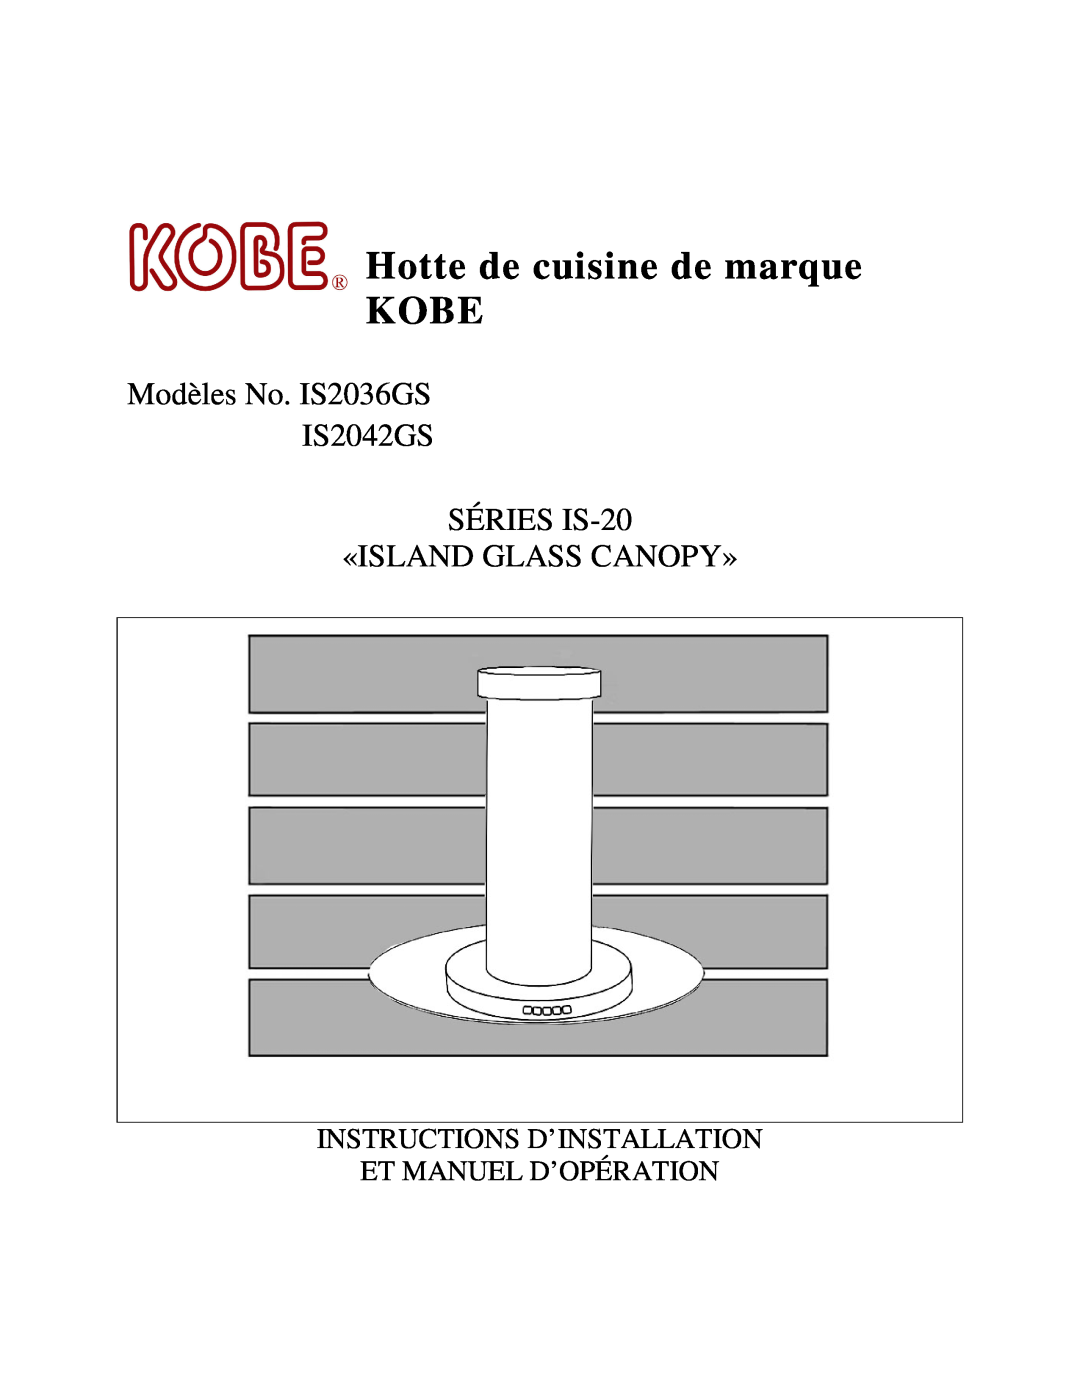 Kobe Range Hoods IS2036GS, IS2042GS Hotte de cuisine de marque KOBE, Instructions D’Installation Et Manuel D’Opération 